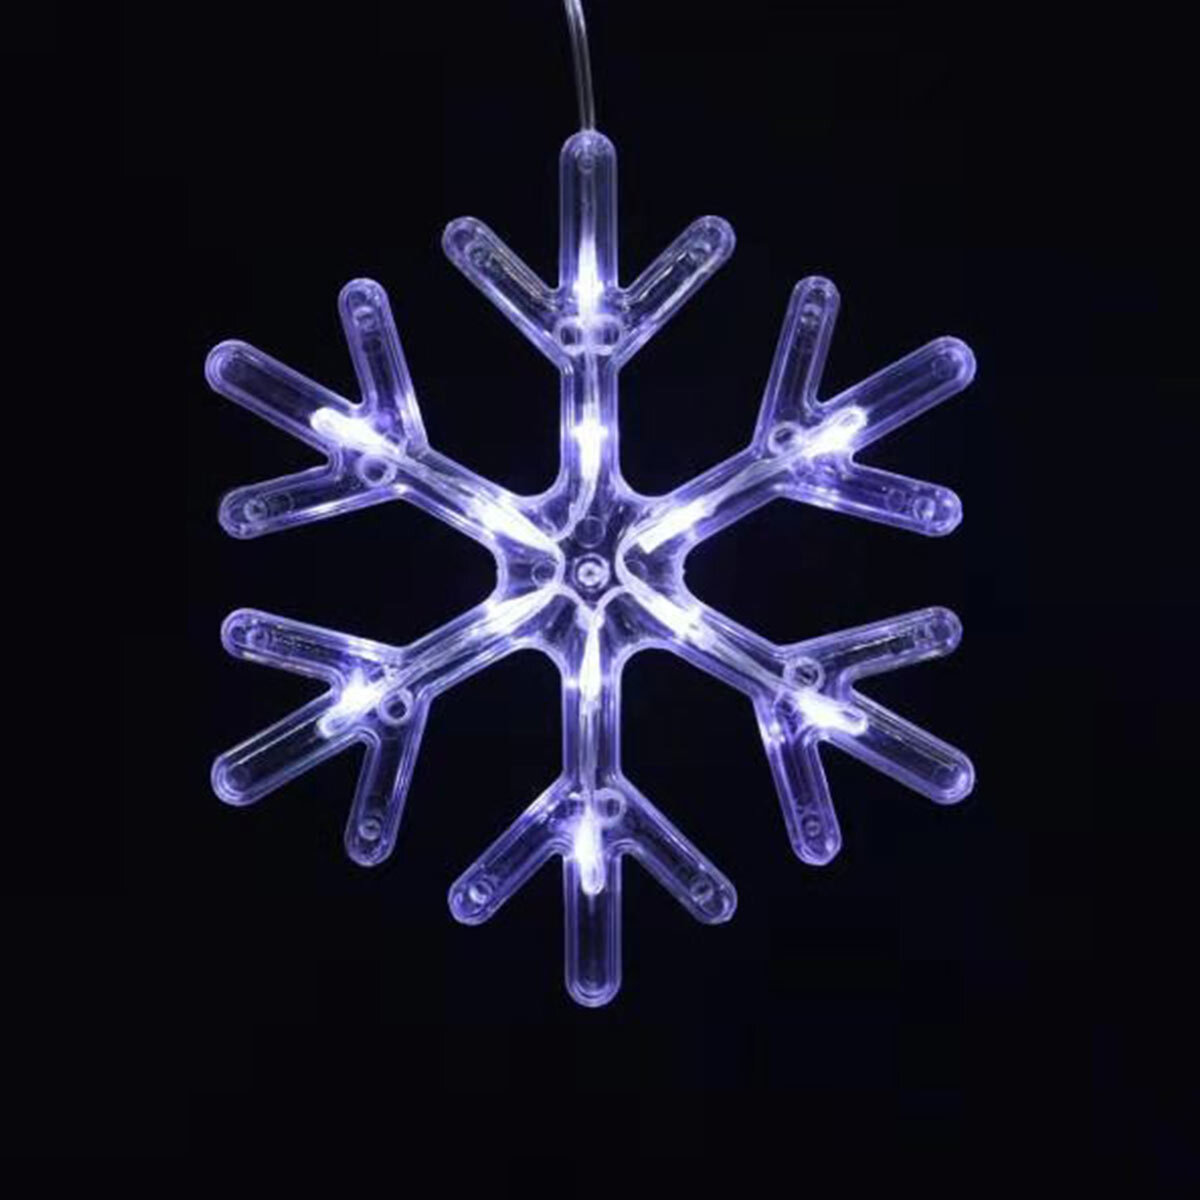 Buy 18ft Snowflake LED String Lights Close-up2 Image at Costco.co.uk